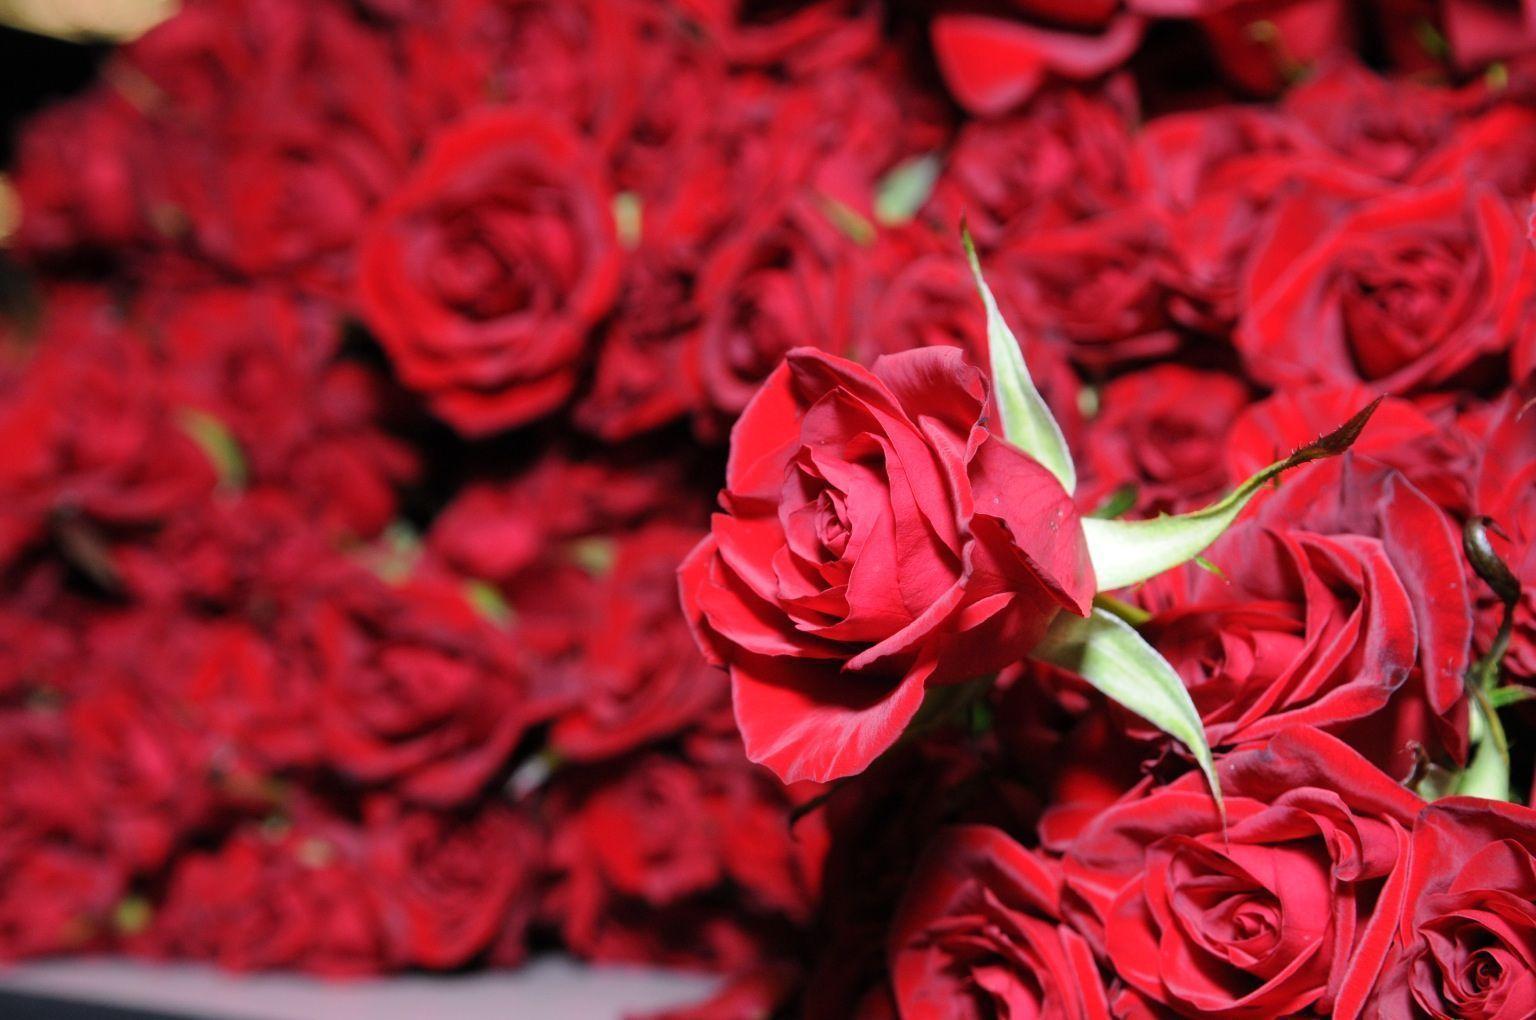 red rose flower collection HD desktop background wallpaper. Fine